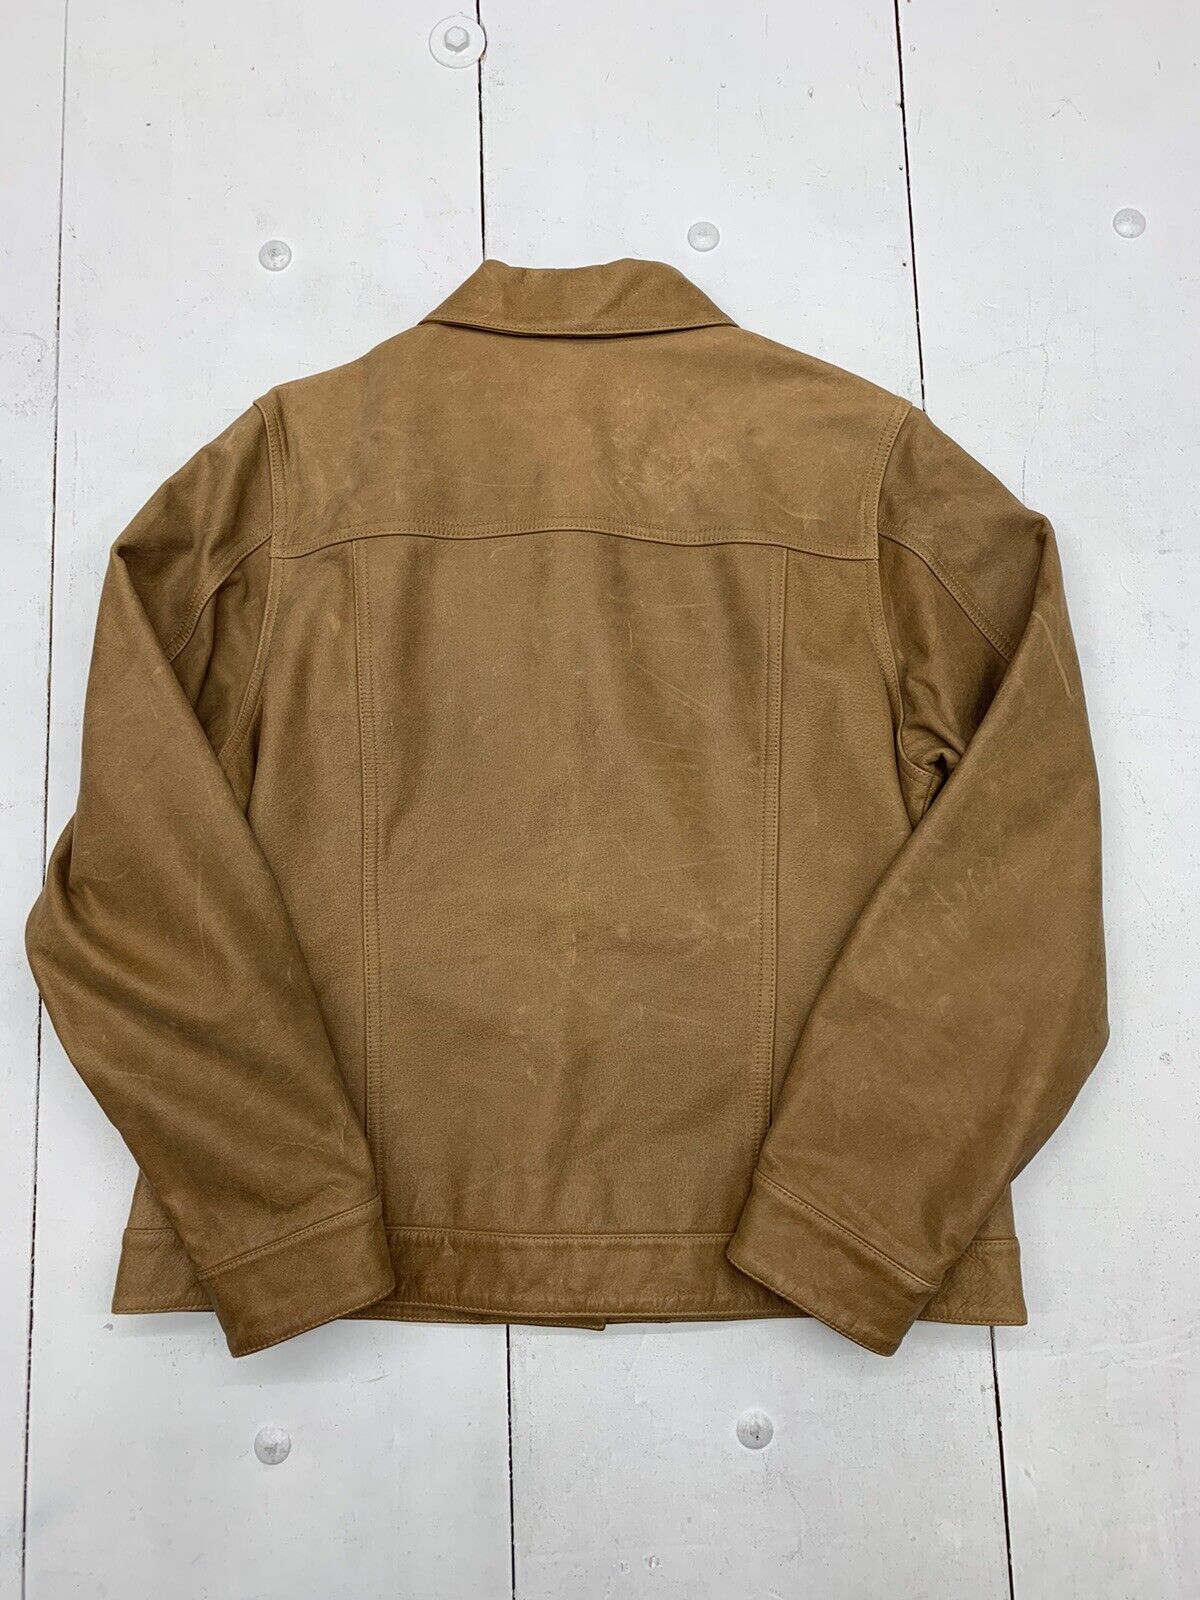 Talbots Womens Brown Leather Button Up Jacket Size Medium - beyond exchange